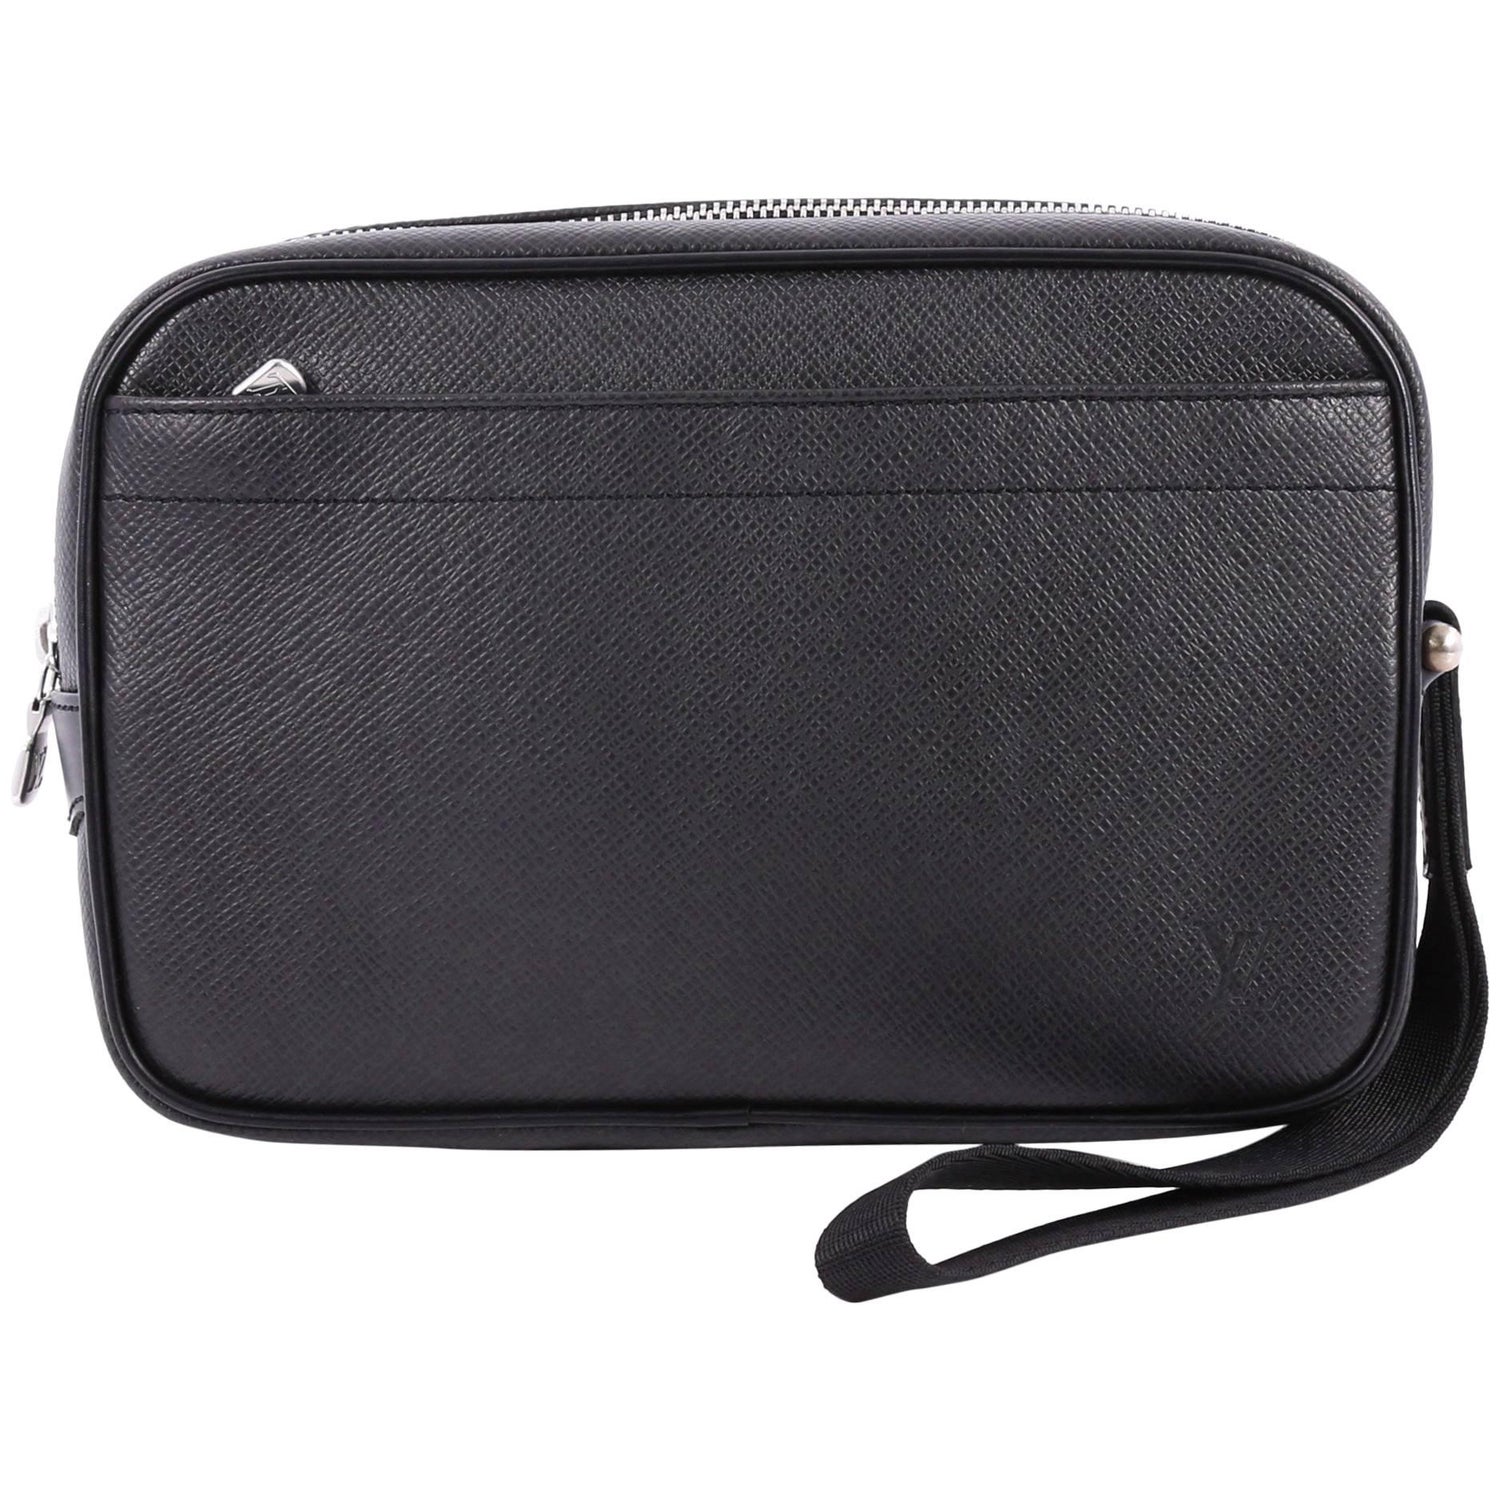 Louis Vuitton man clutch purse handbag original leather